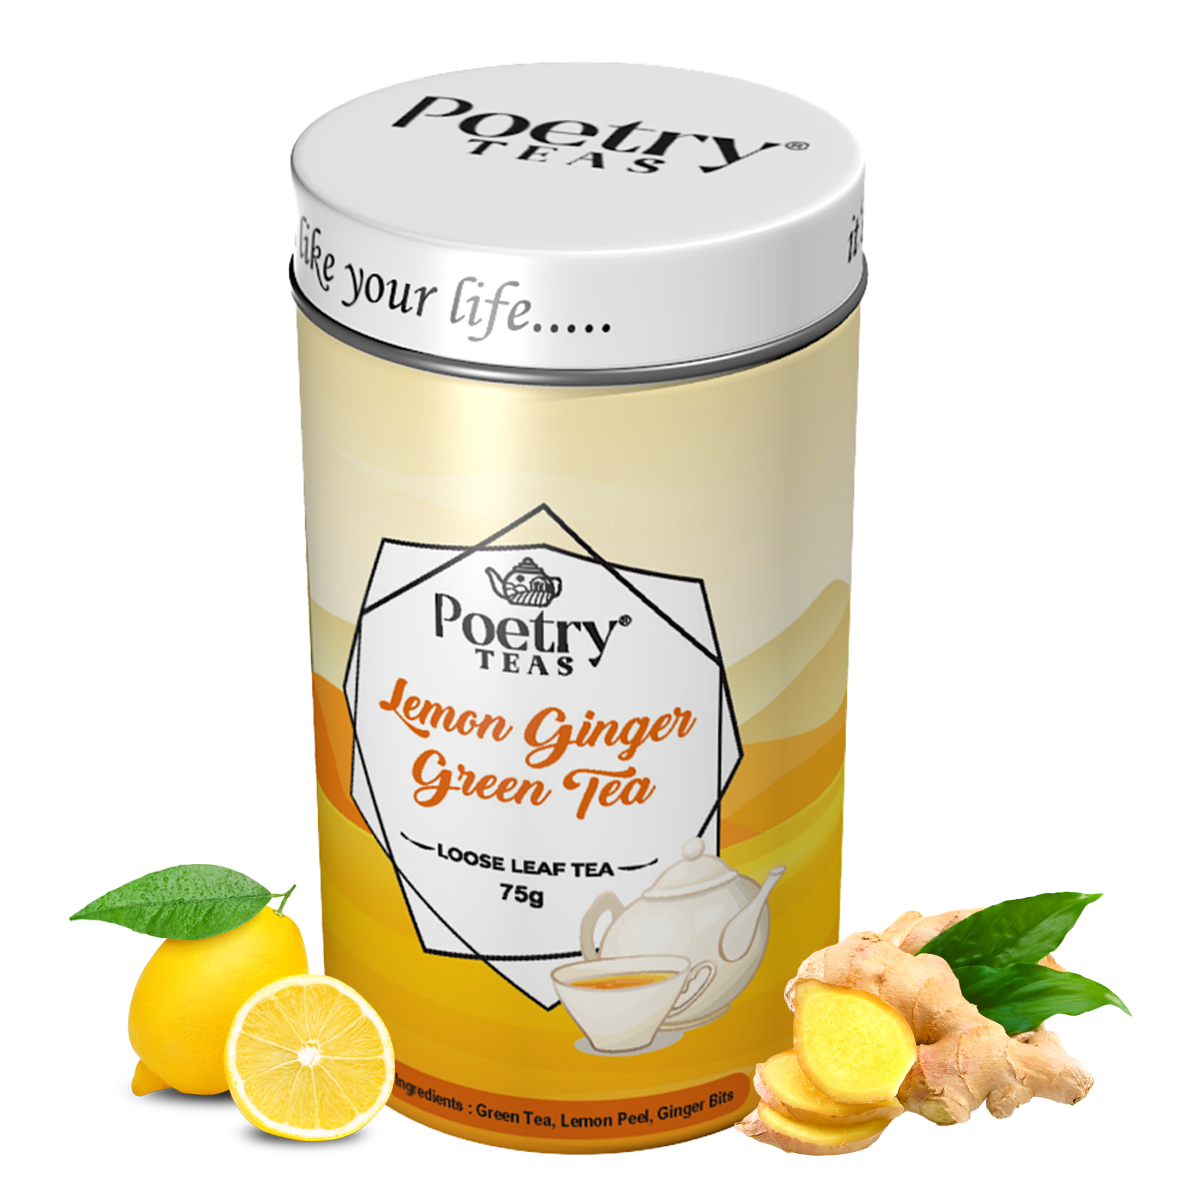 Poetry Lemon Ginger Green Tea - 75g Loose Leaf